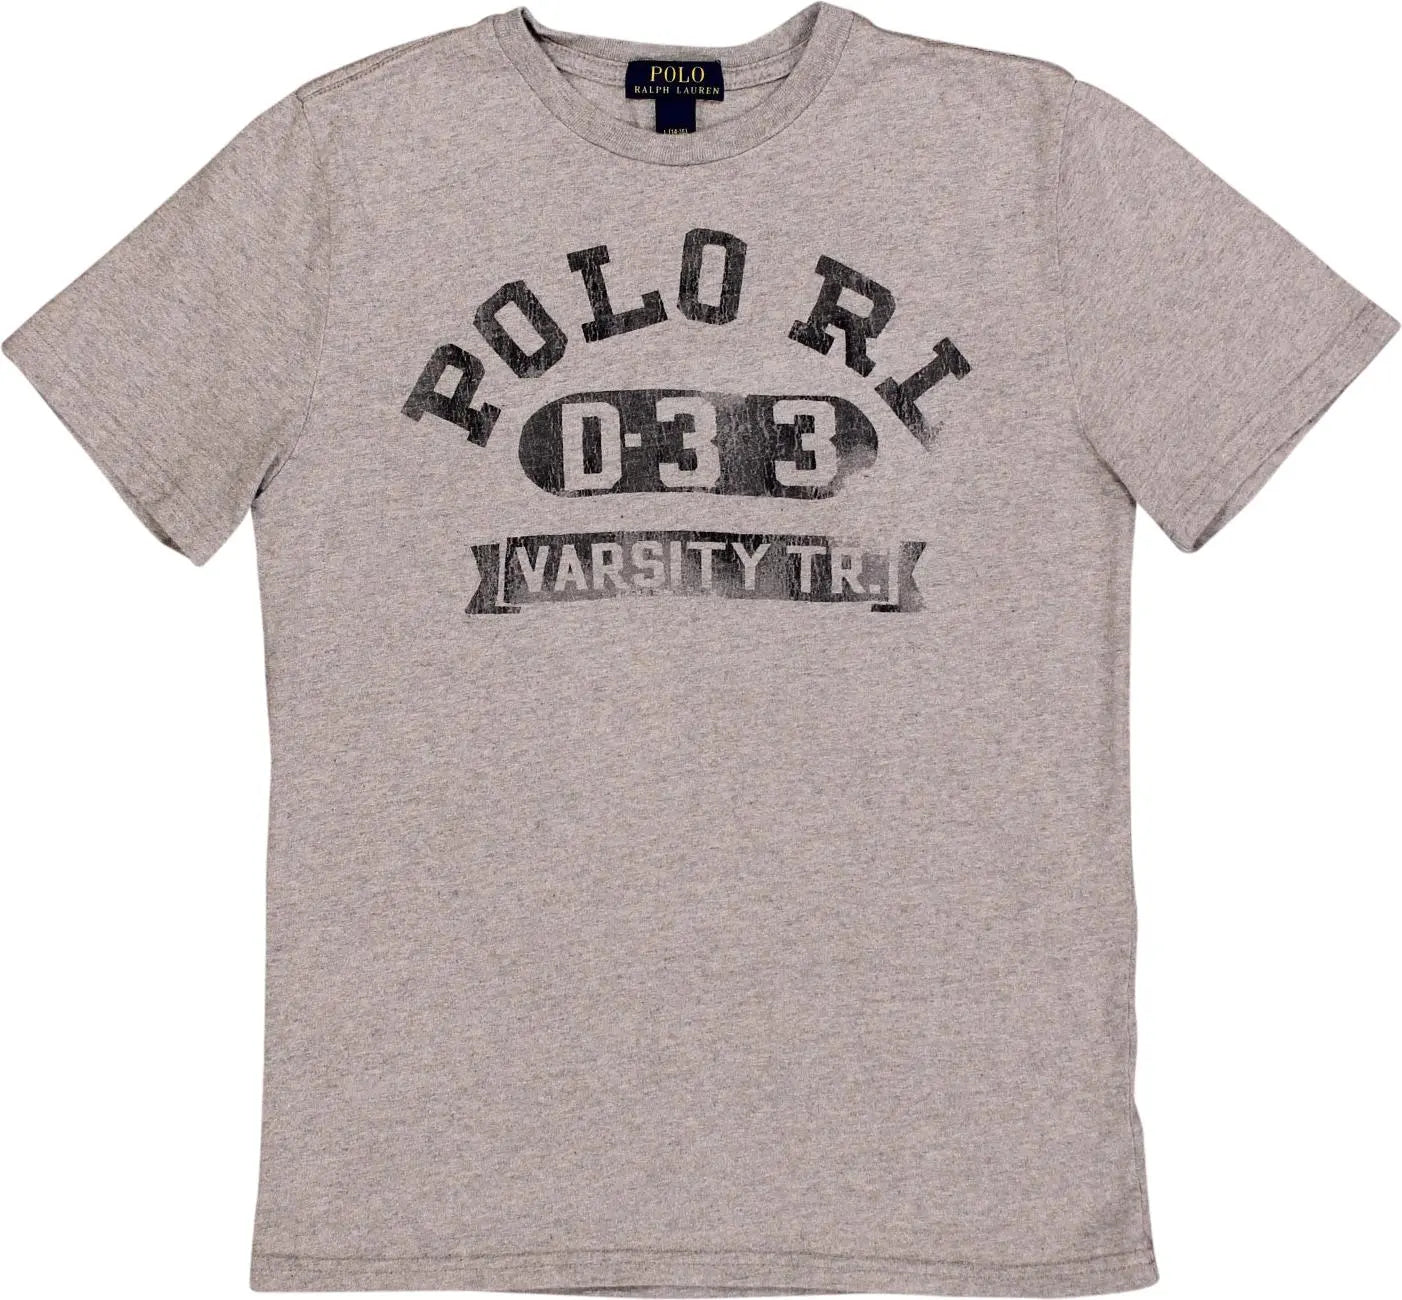 Ralph Lauren - Grey T-shirt by Ralph Lauren- ThriftTale.com - Vintage and second handclothing